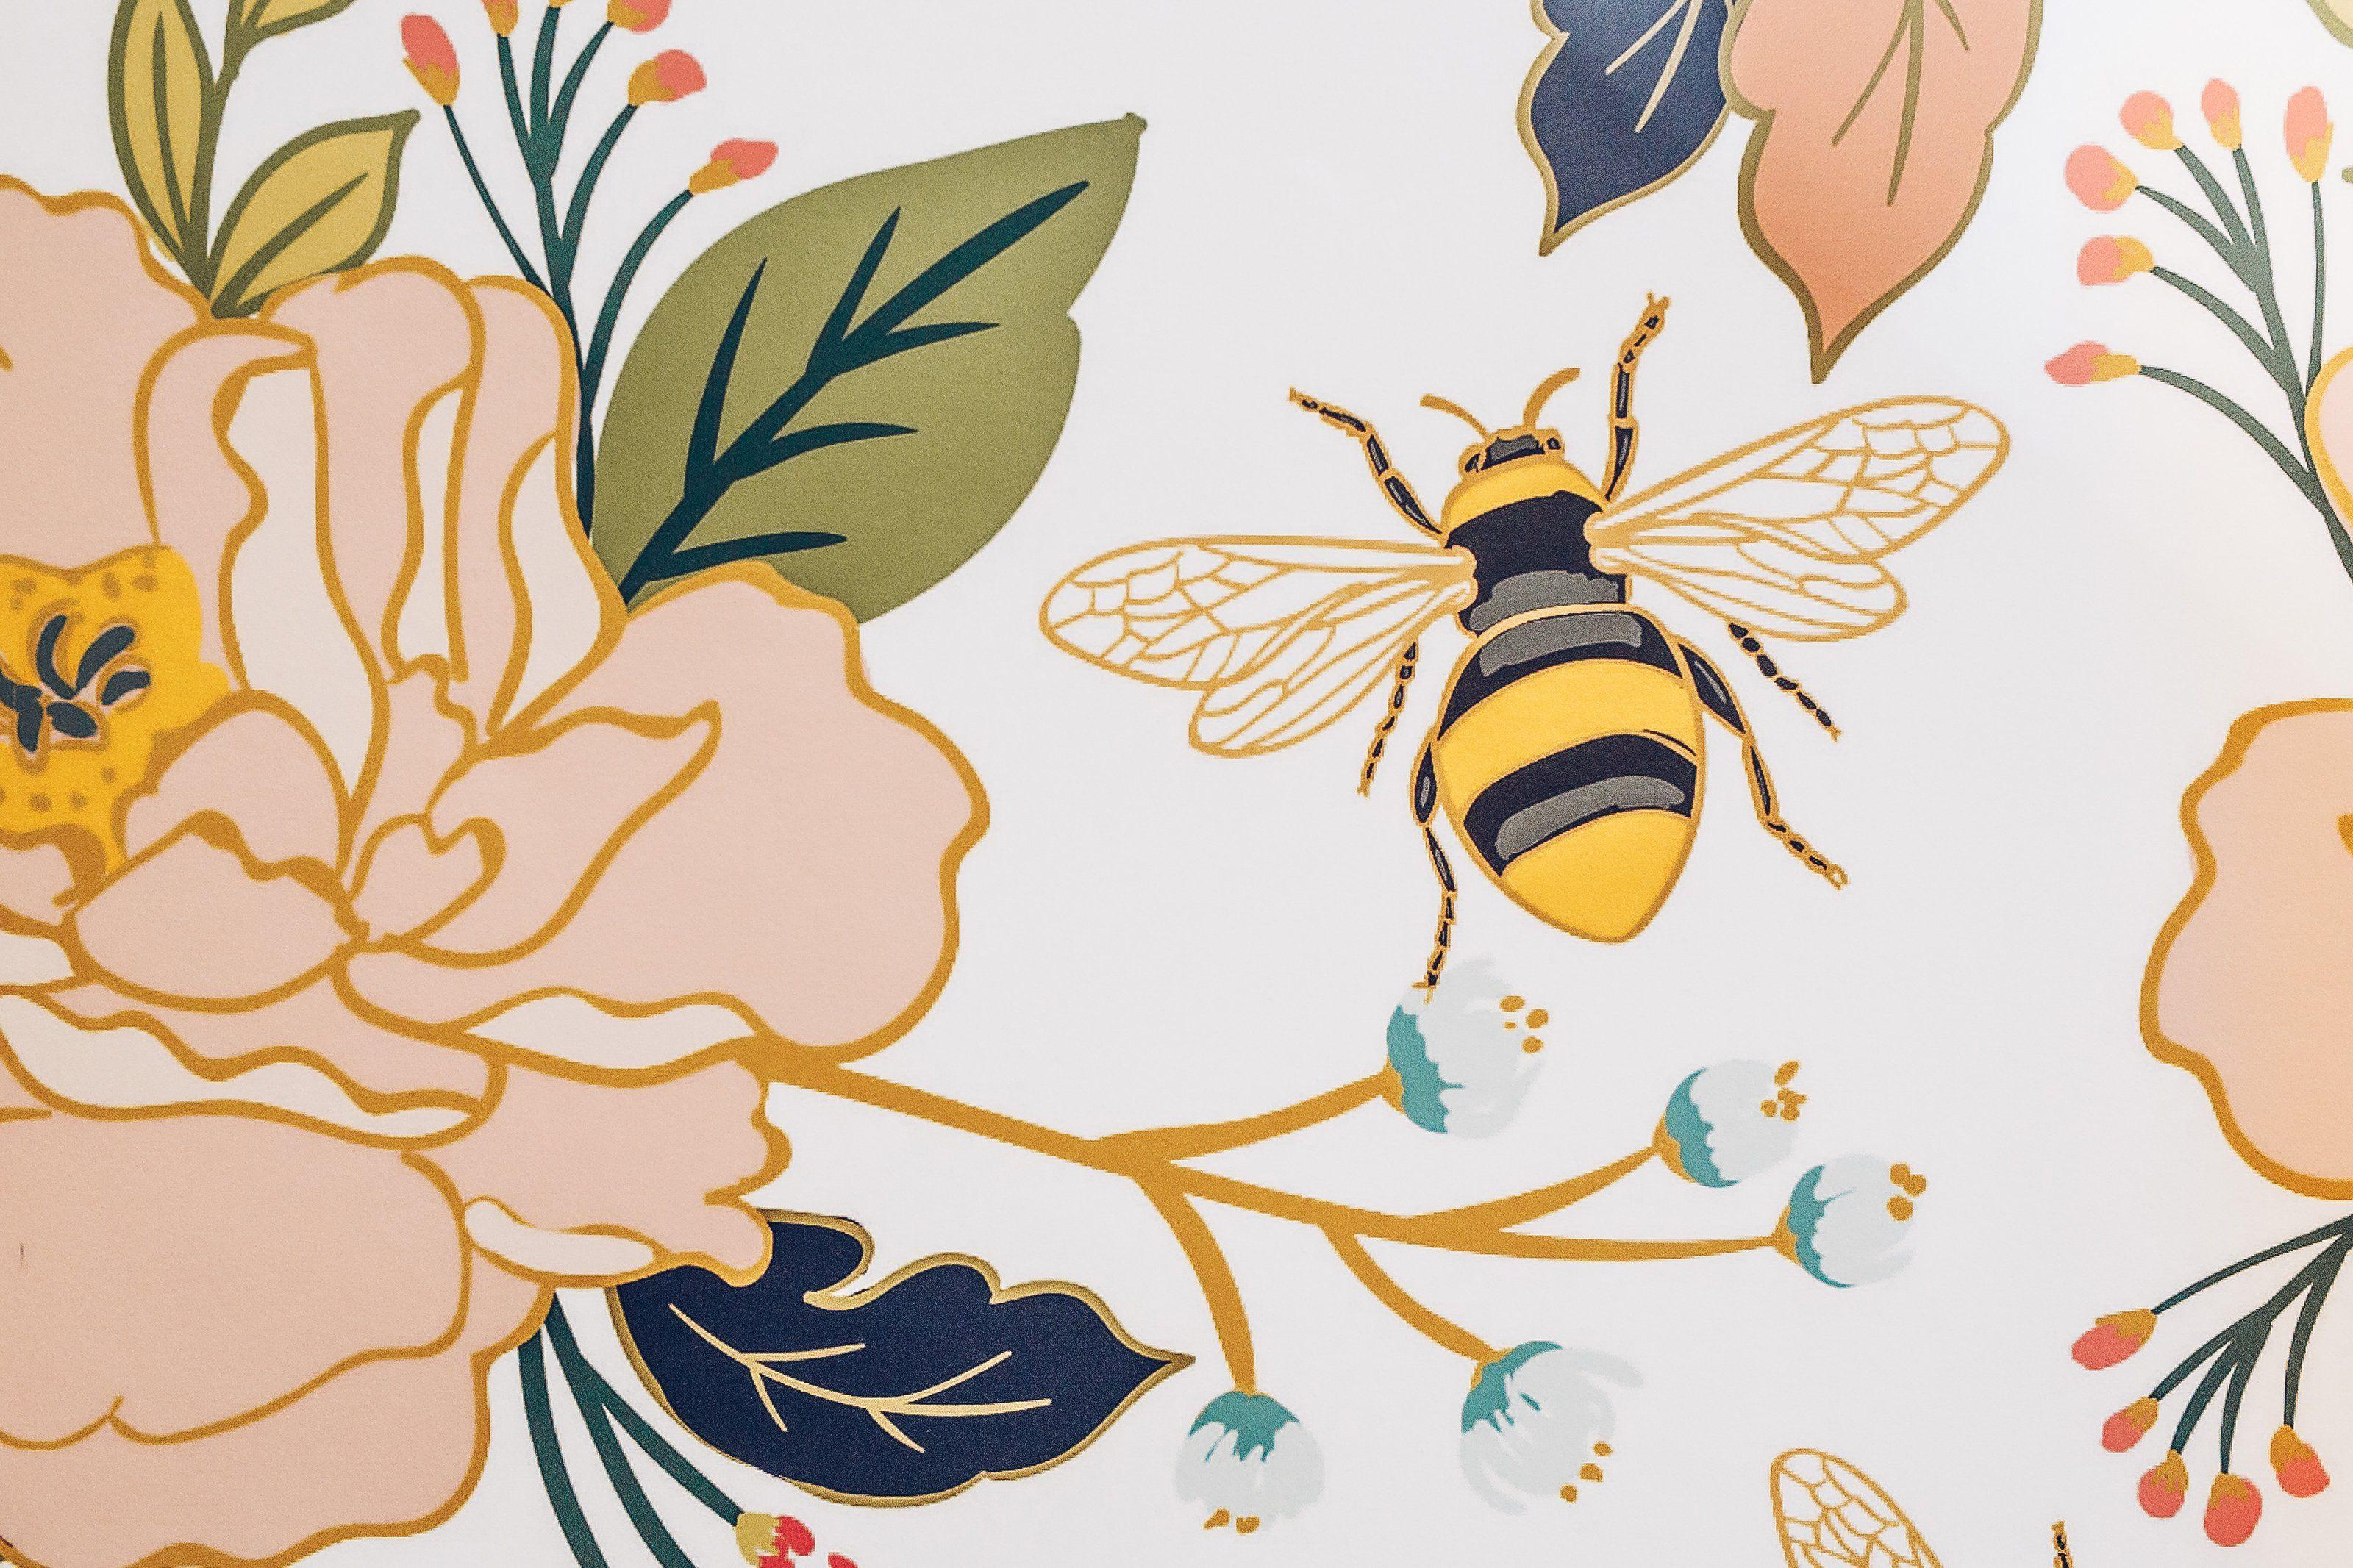 Bee wallpaper Vectors  Illustrations for Free Download  Freepik